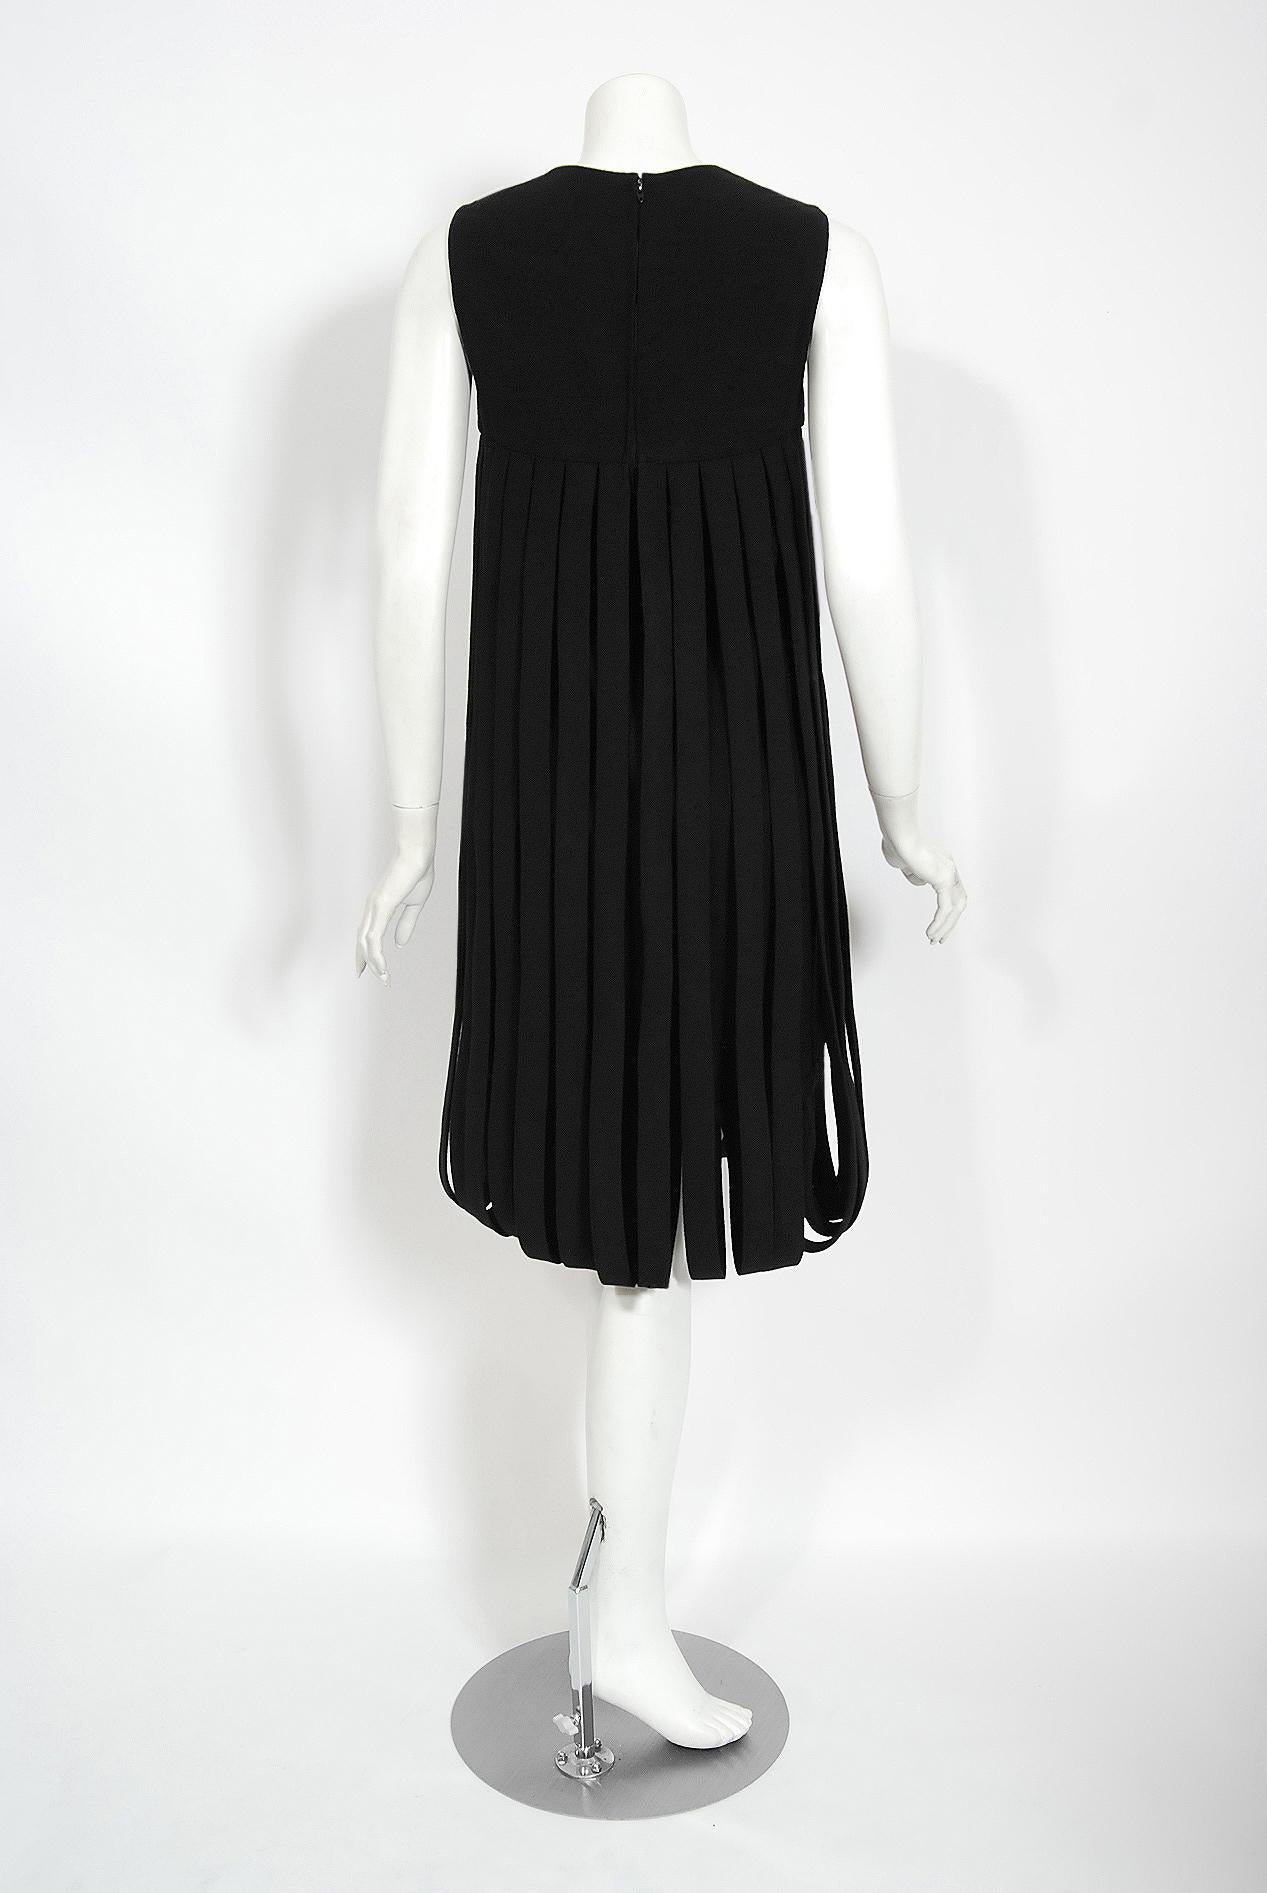 Vintage 1967 Pierre Cardin Documented Black Wool Space-Age Mod Carwash Dress 7